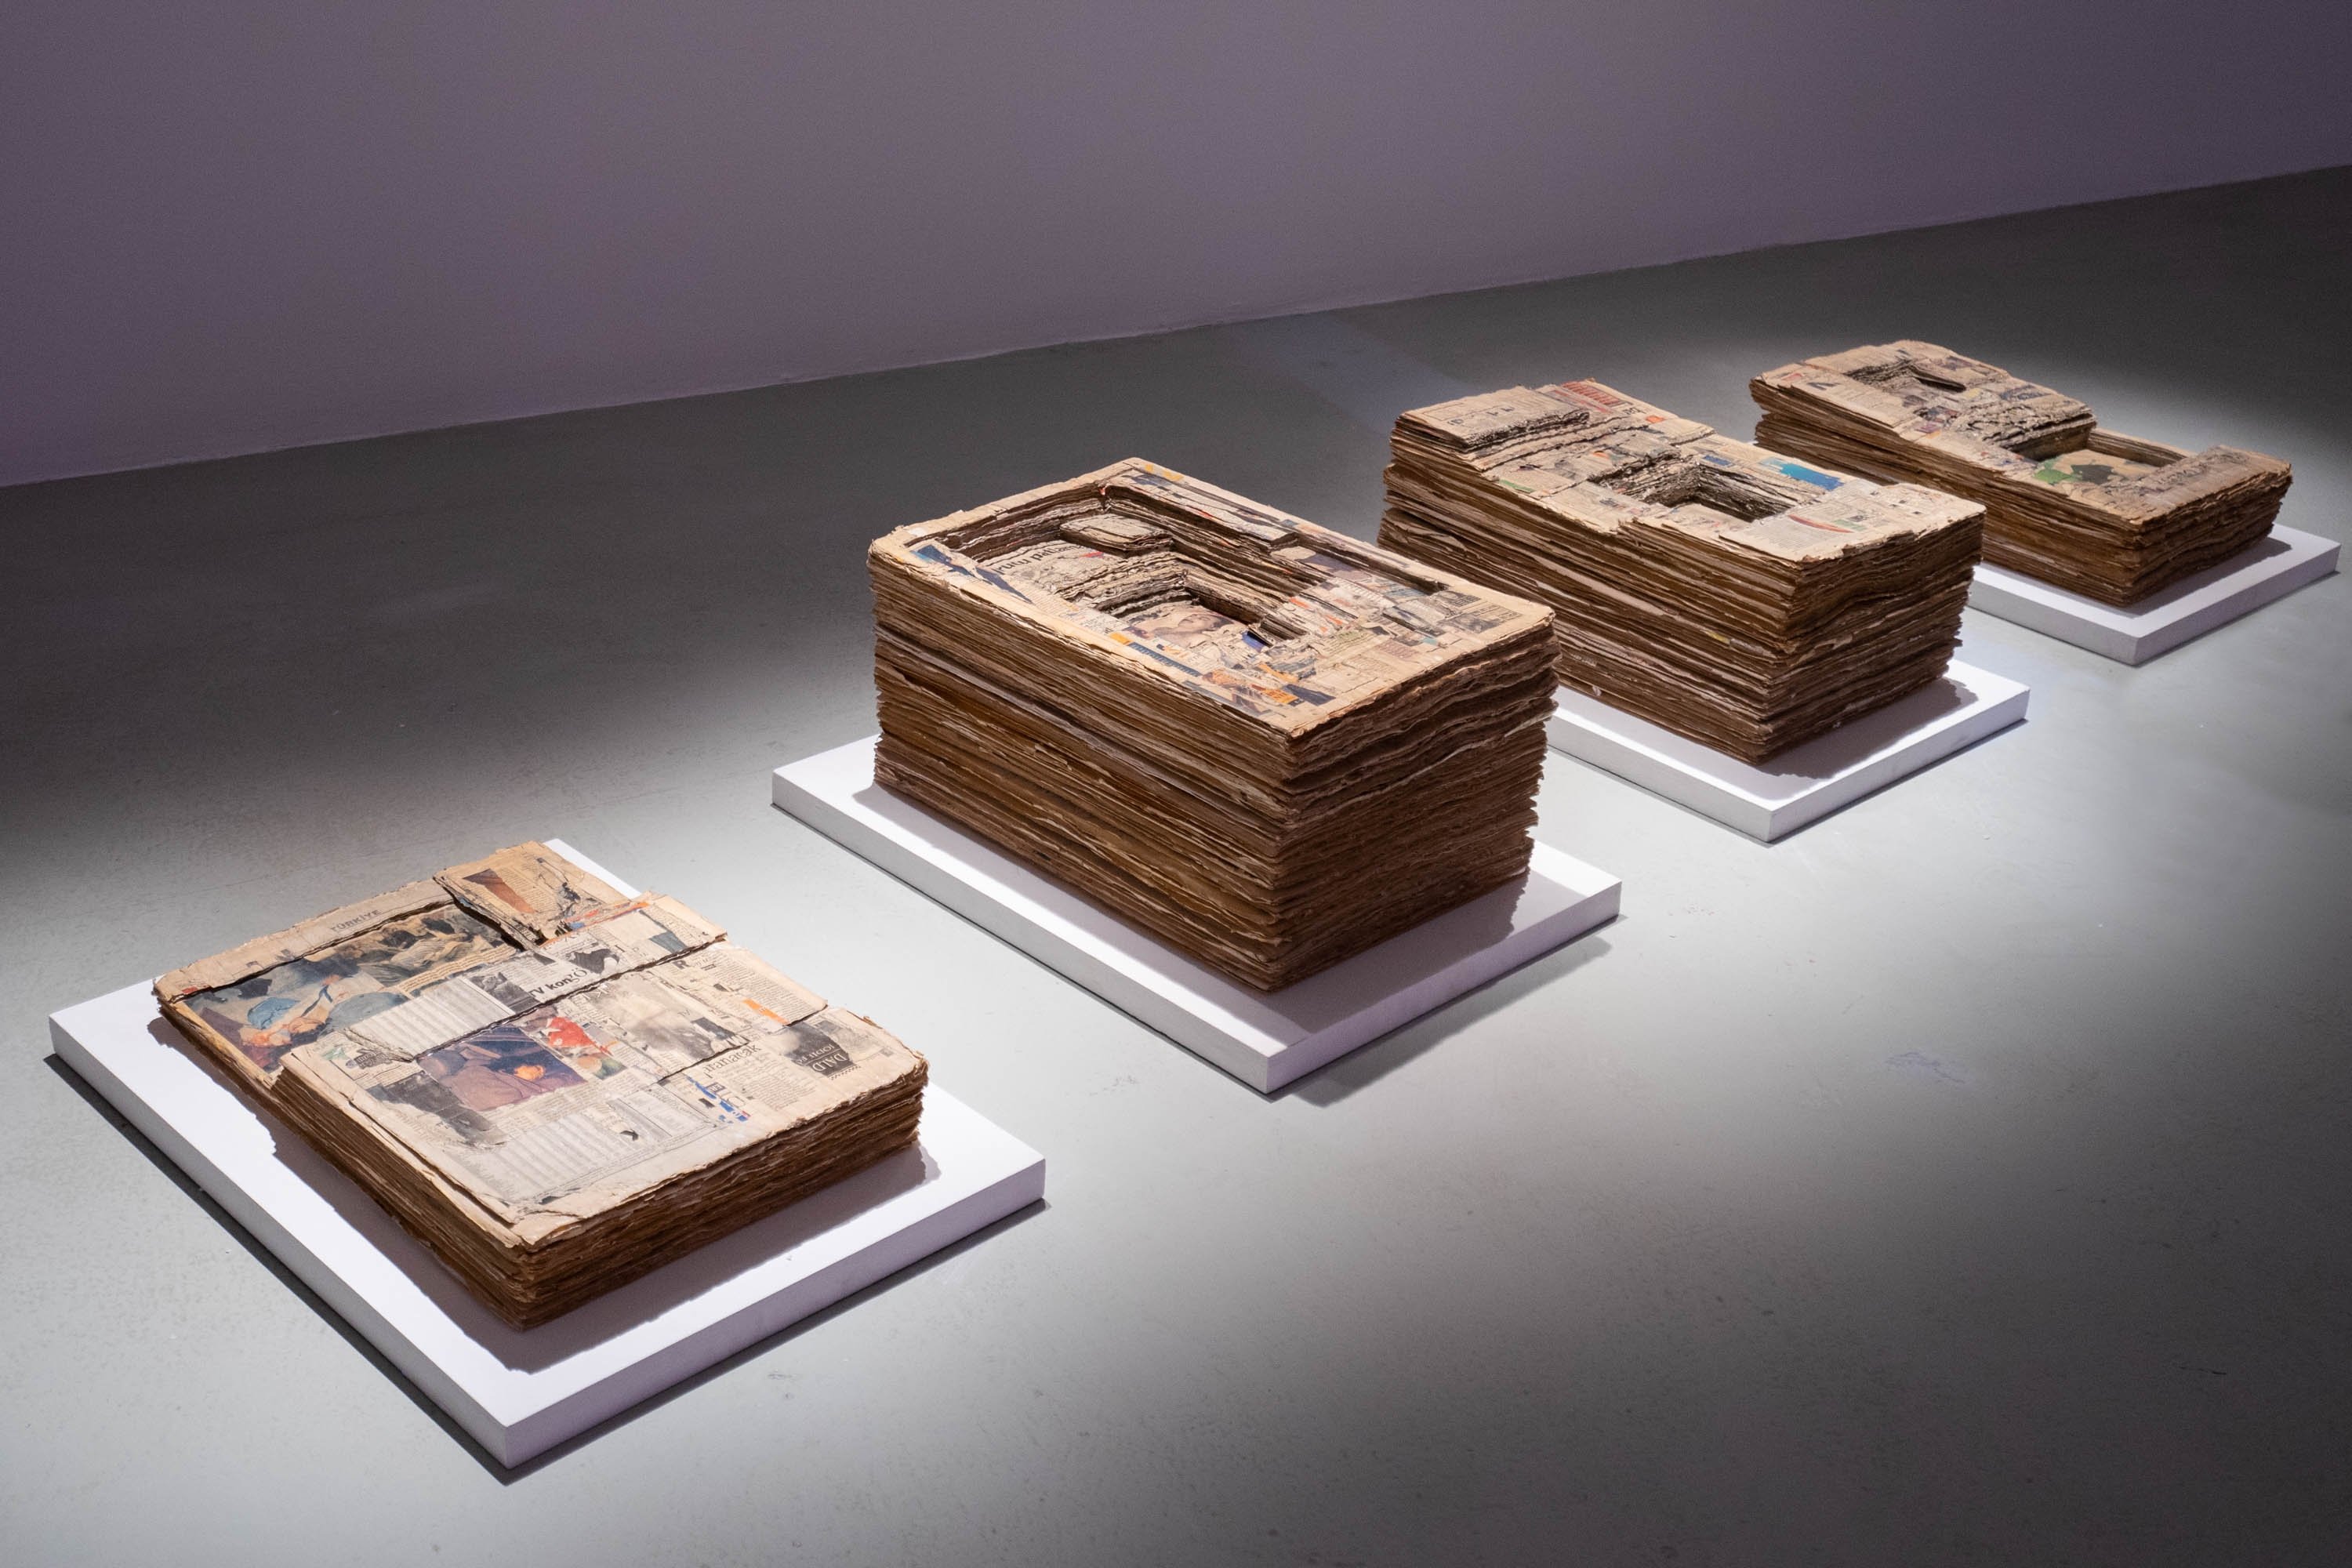 İrfan Önürmen, 'Archive II Death = Death,' 2001, installation, glued newspapers.